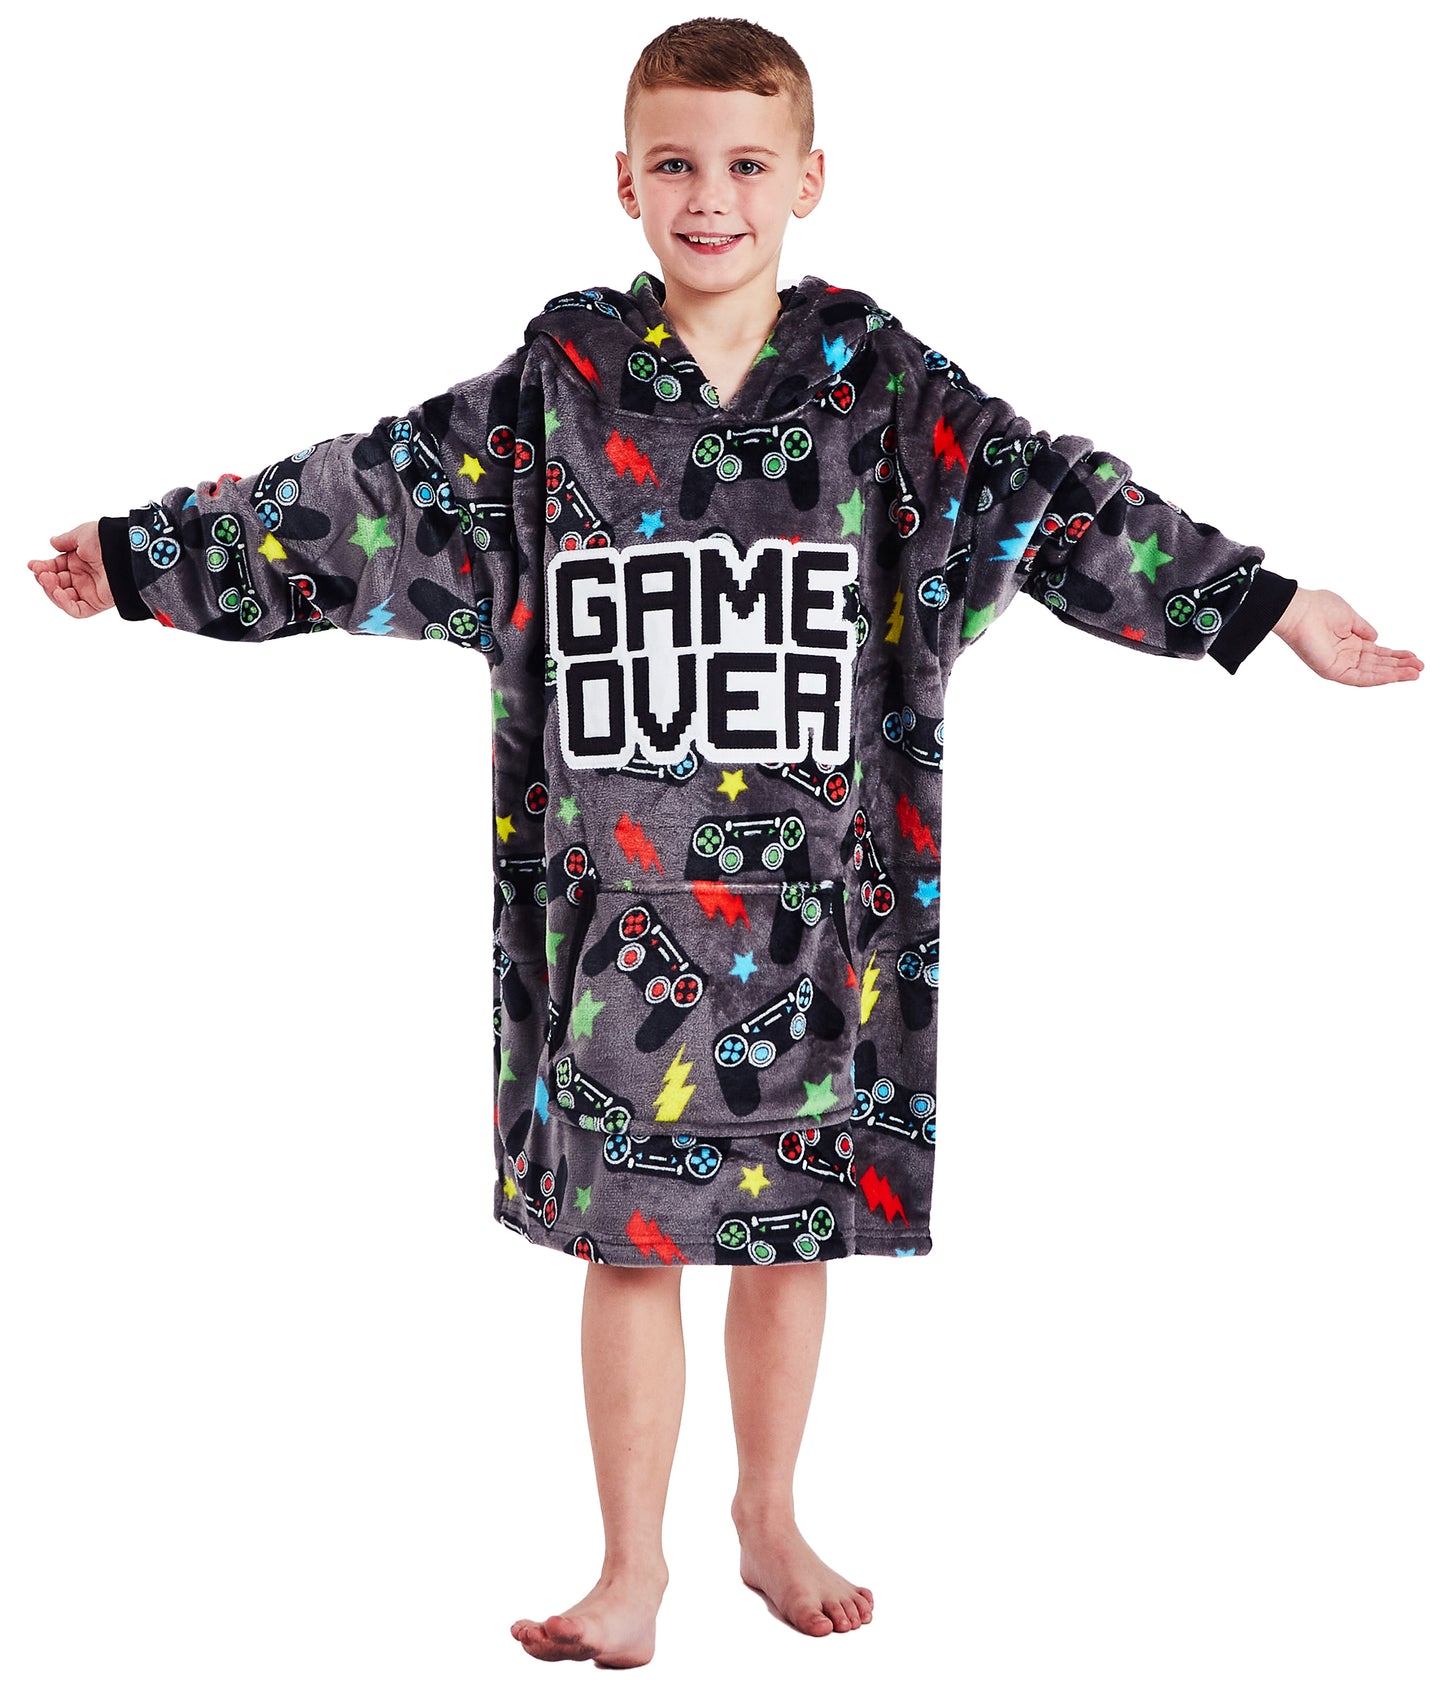 Gamer Oversized Hoodie & Pyjama Set - Proud to be a Gamer